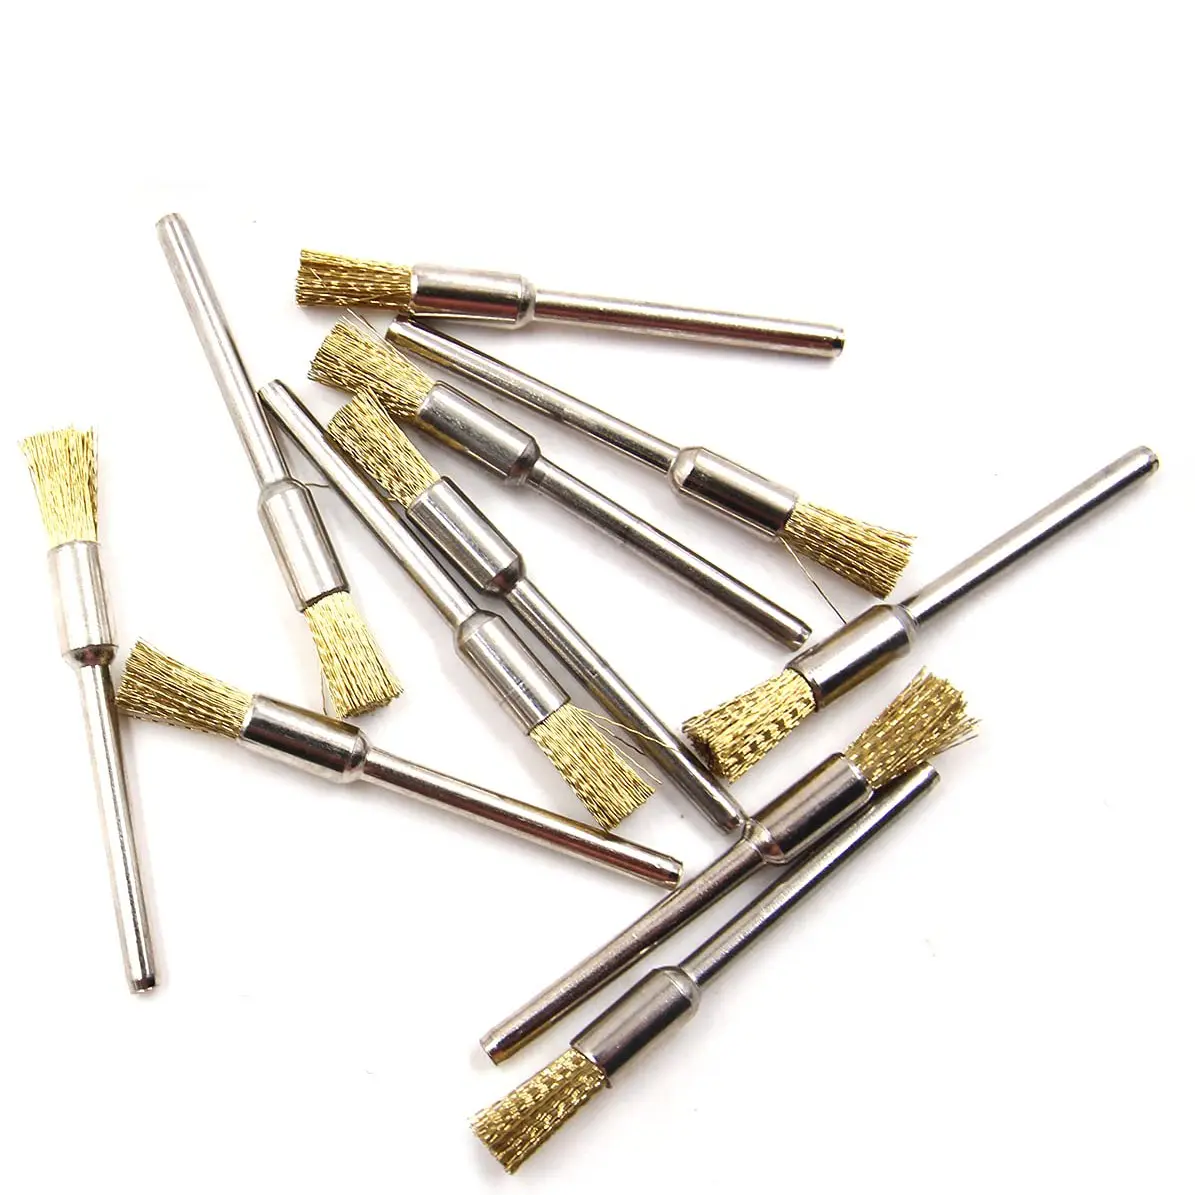 Vente en gros brosse rotative en forme de stylo en acier brosse de polissage pour bijoux brosse métallique